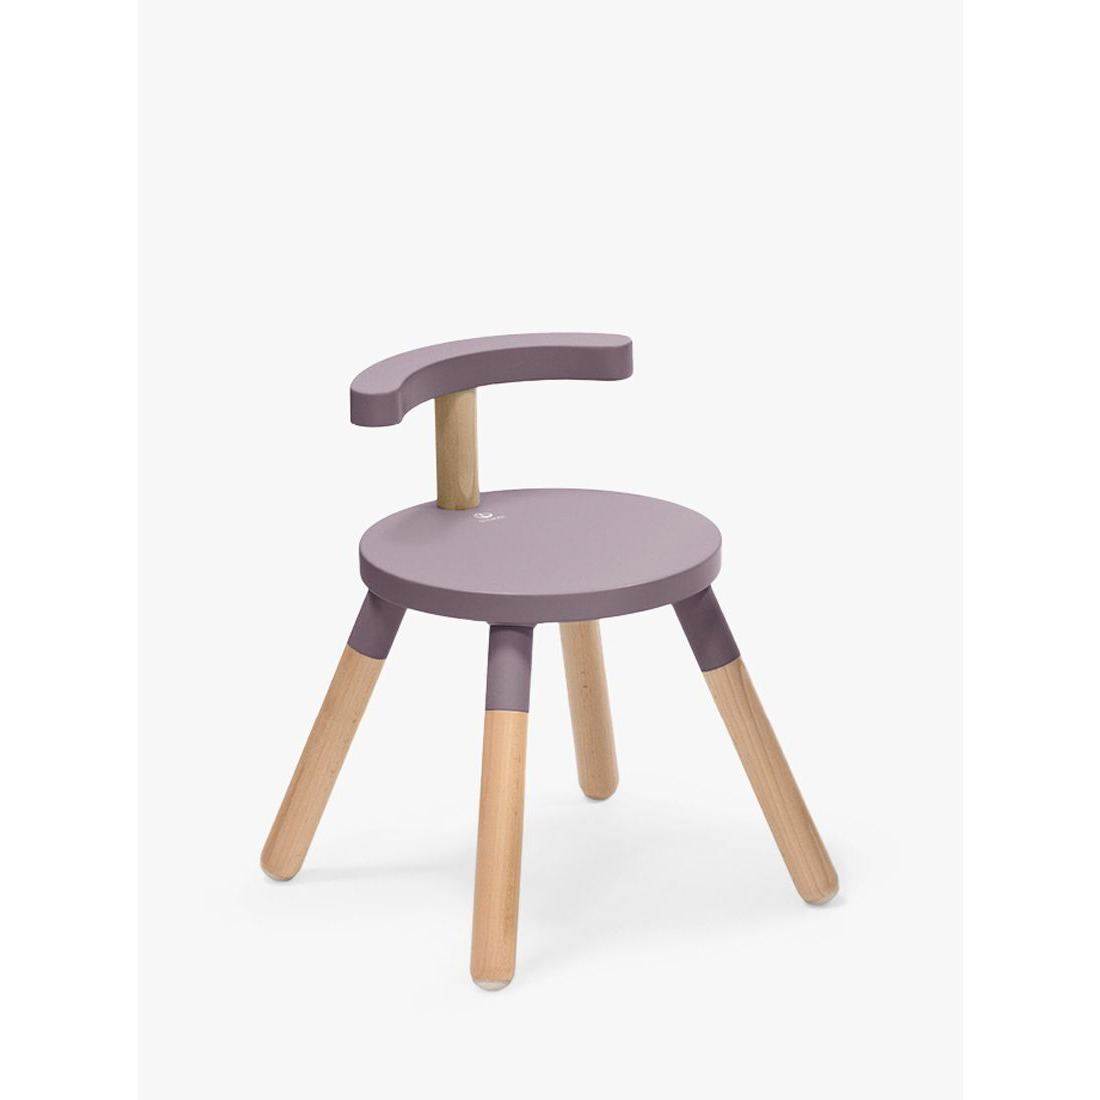 Stokke MuTable V2 Wooden Kids' Chair - image 1